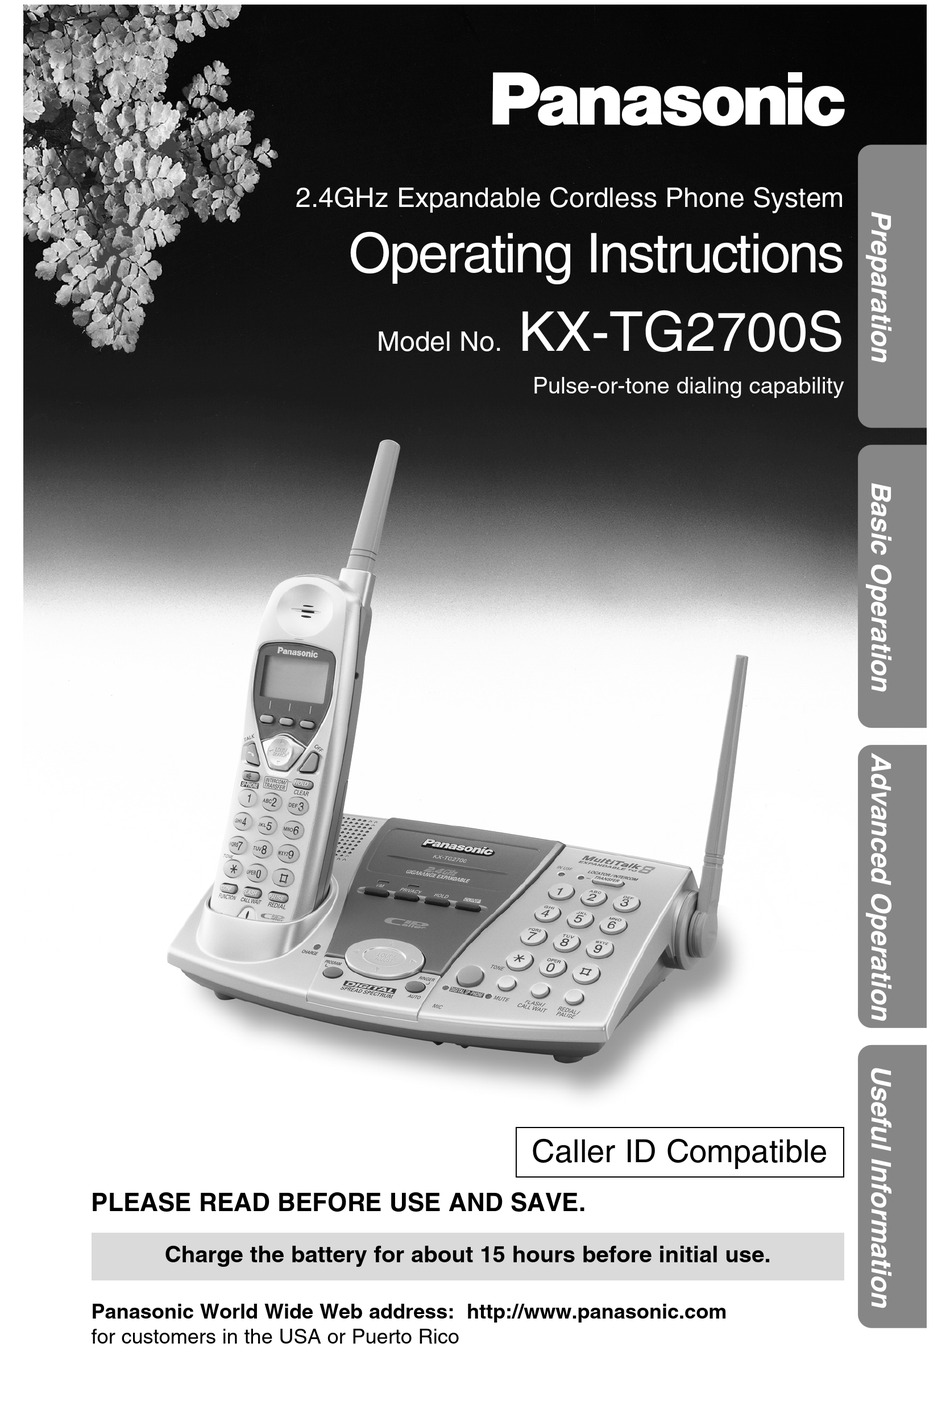 PANASONIC KX-TG2700 OPERATING INSTRUCTIONS MANUAL Pdf Download | ManualsLib